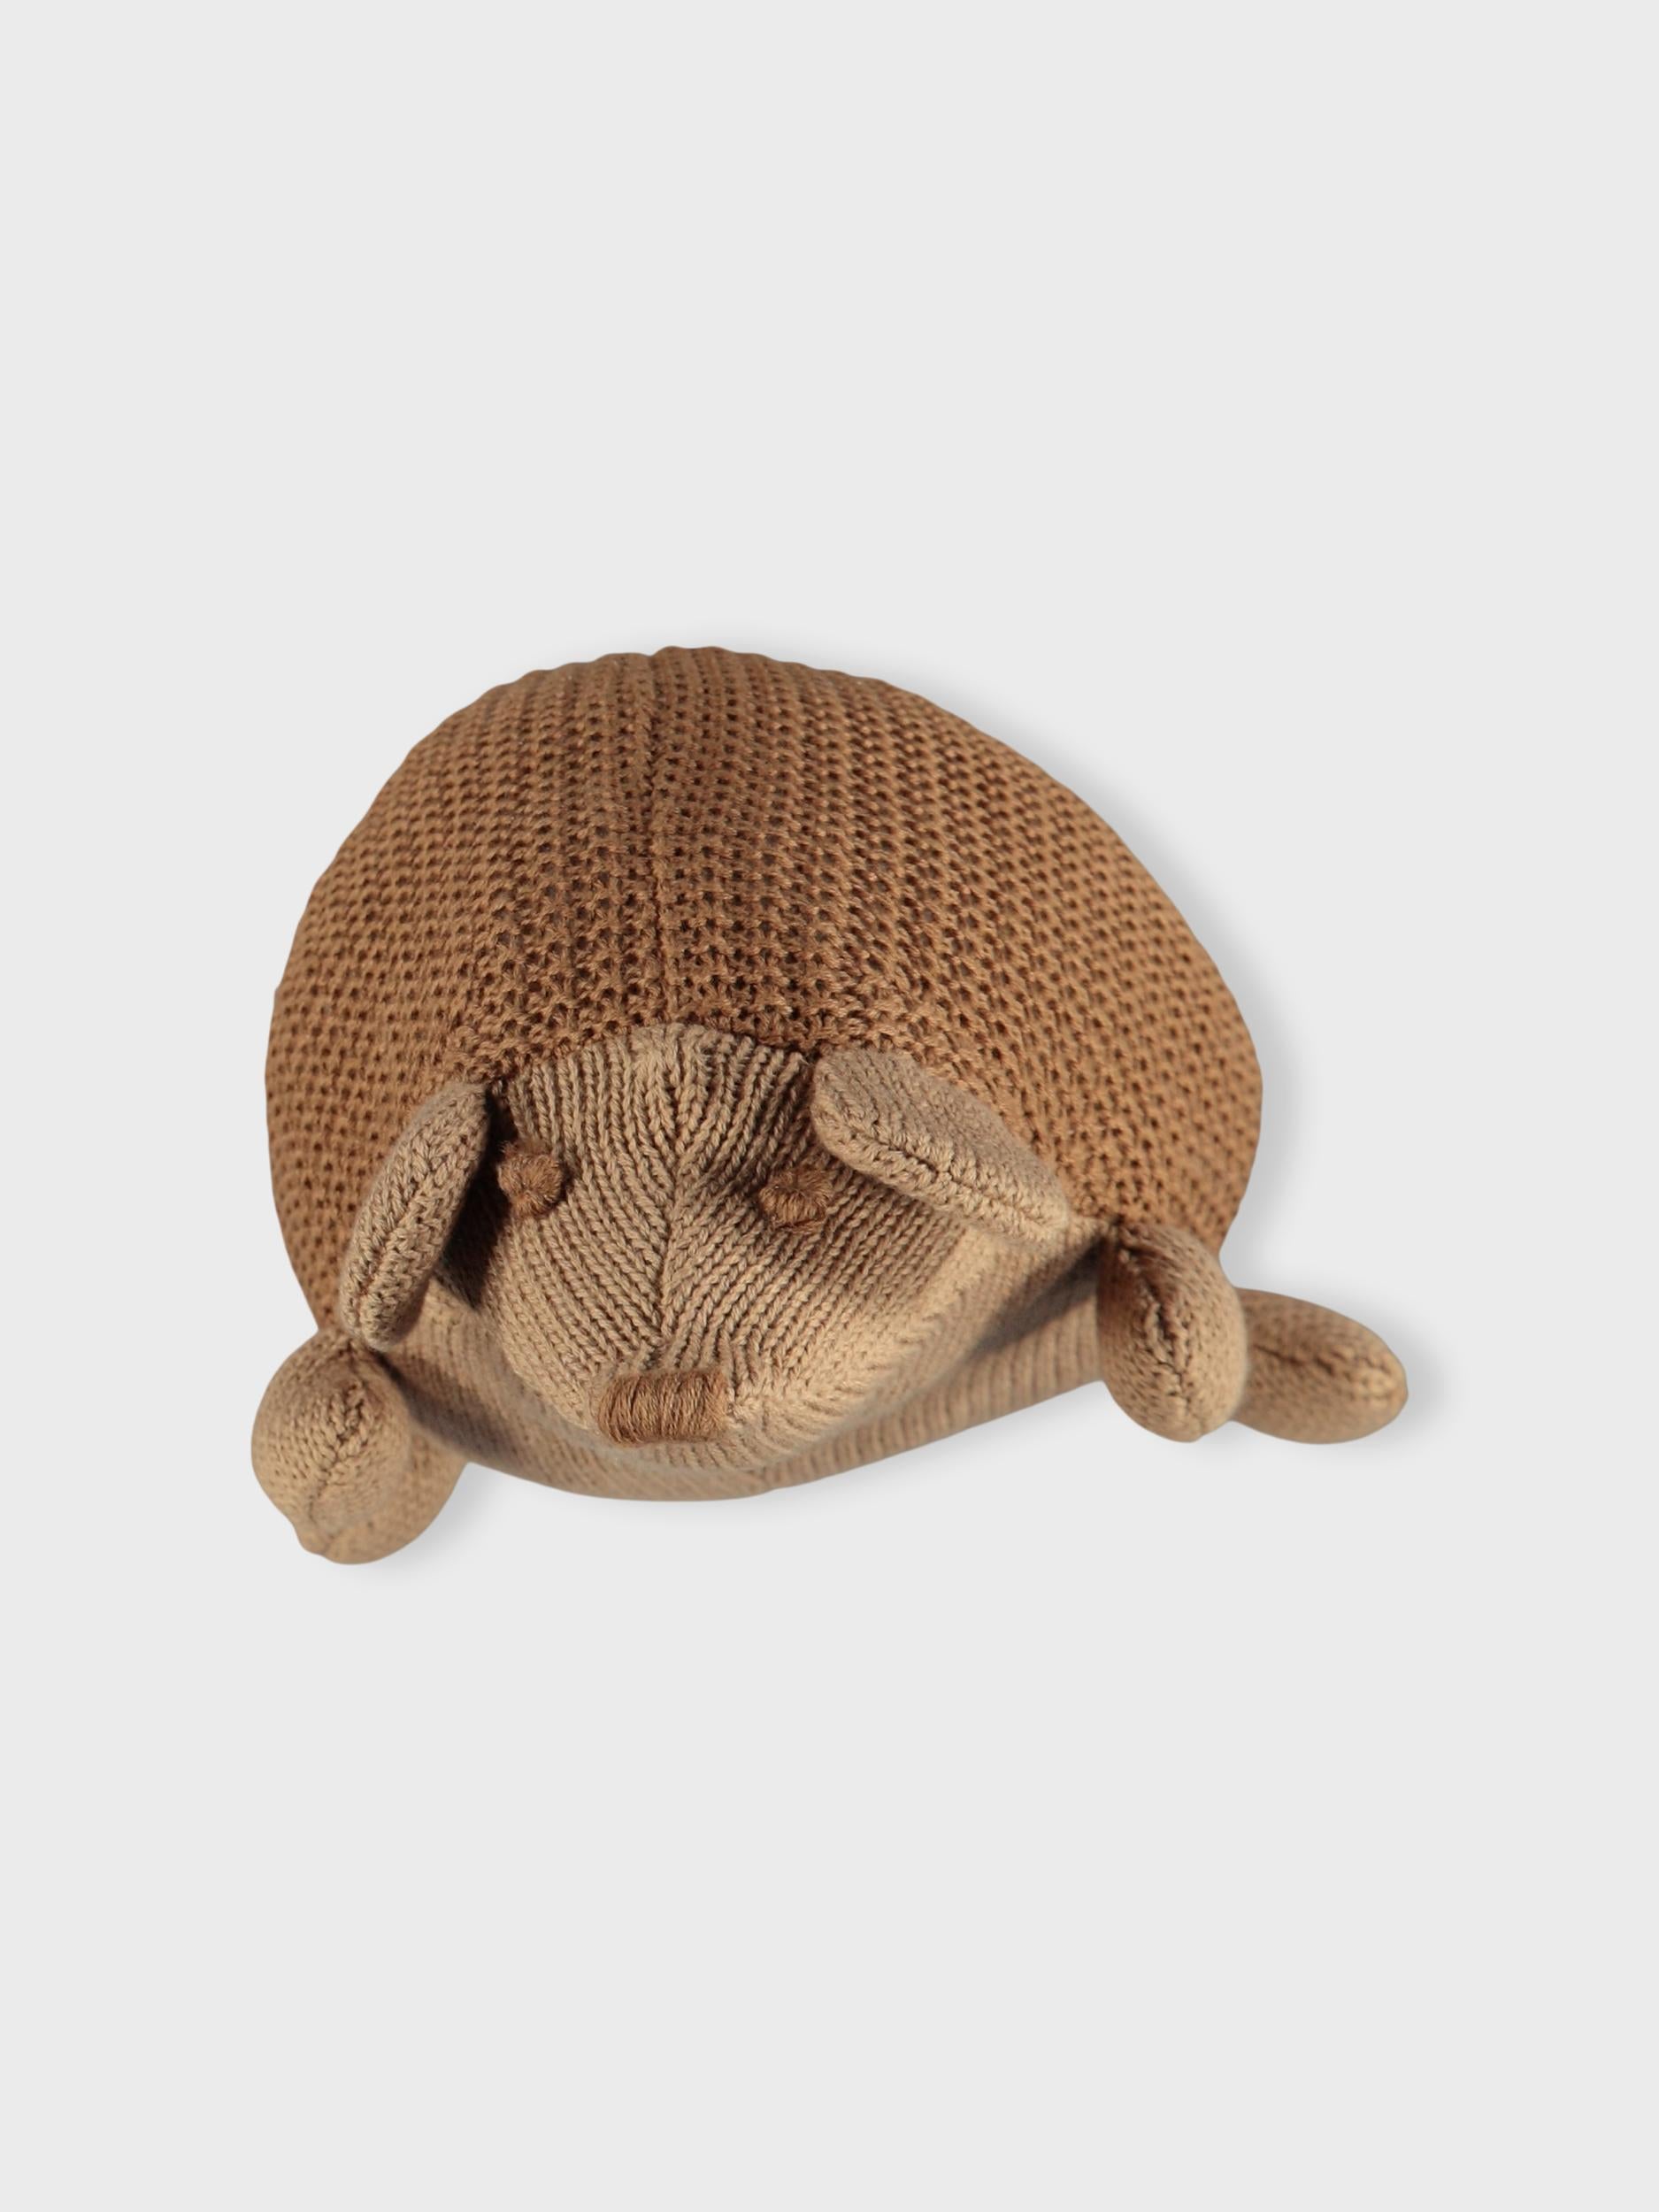 Knit Toy Lumin - Foxtrot